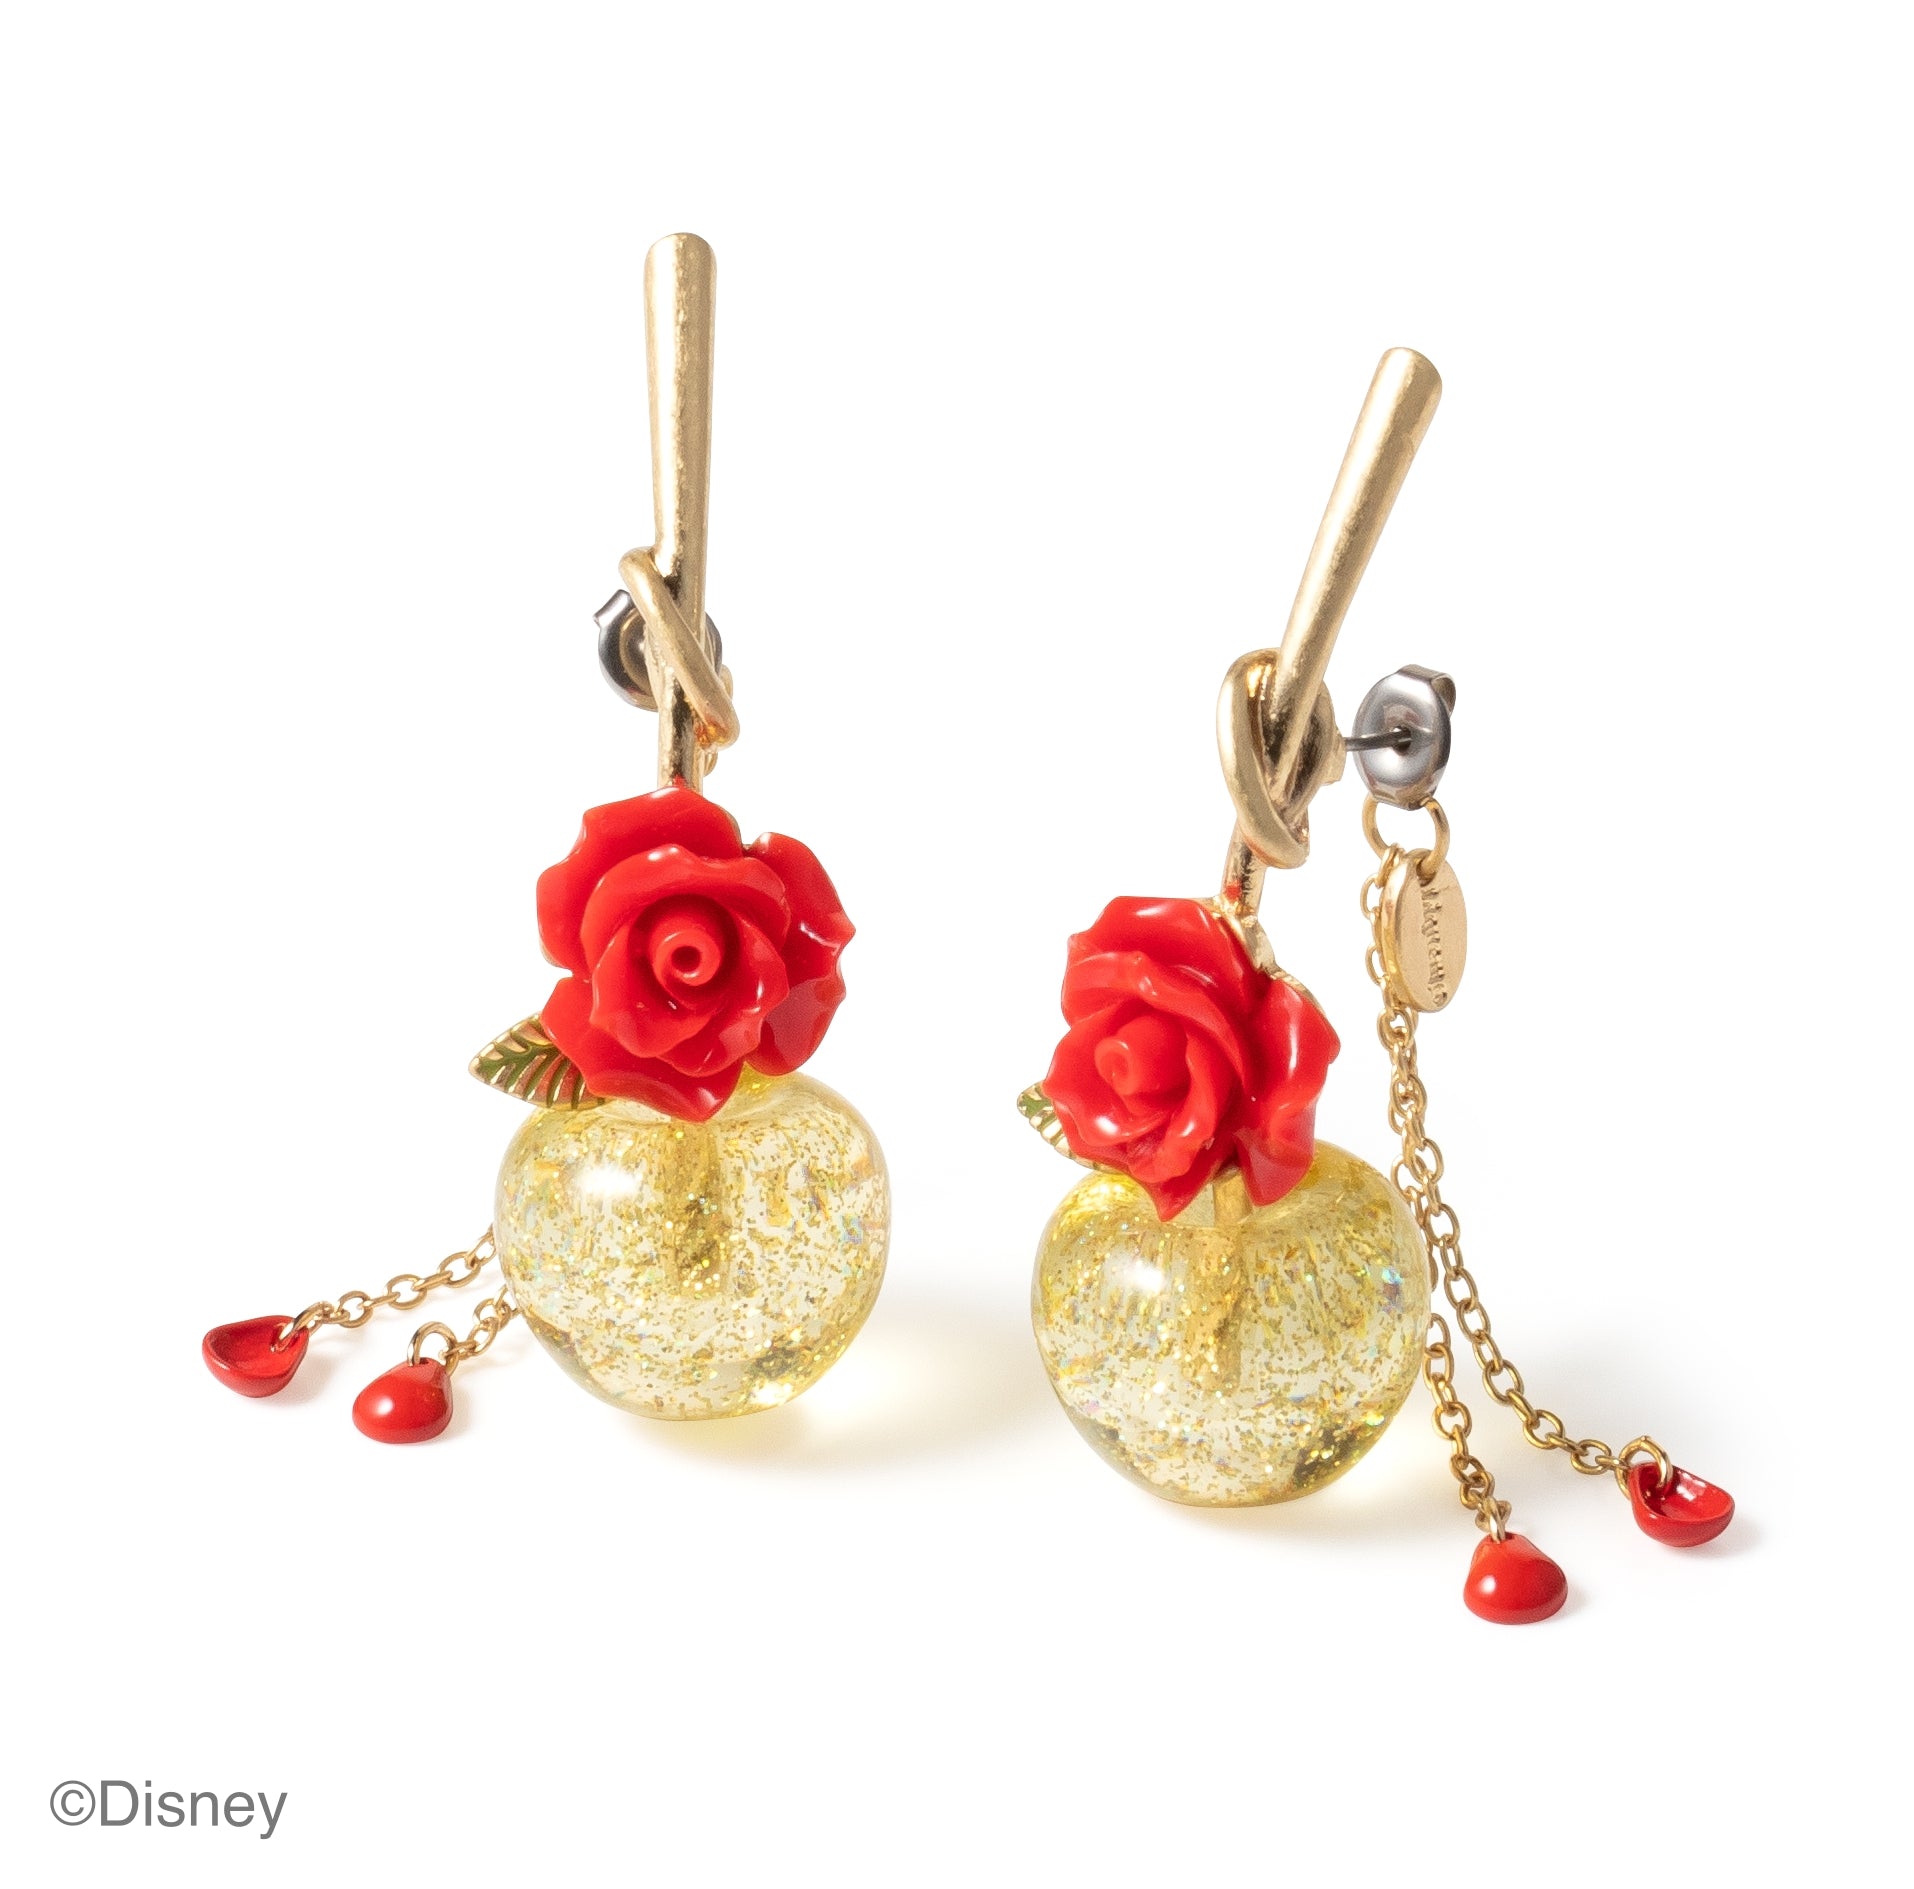 [Bell] Cherry earrings